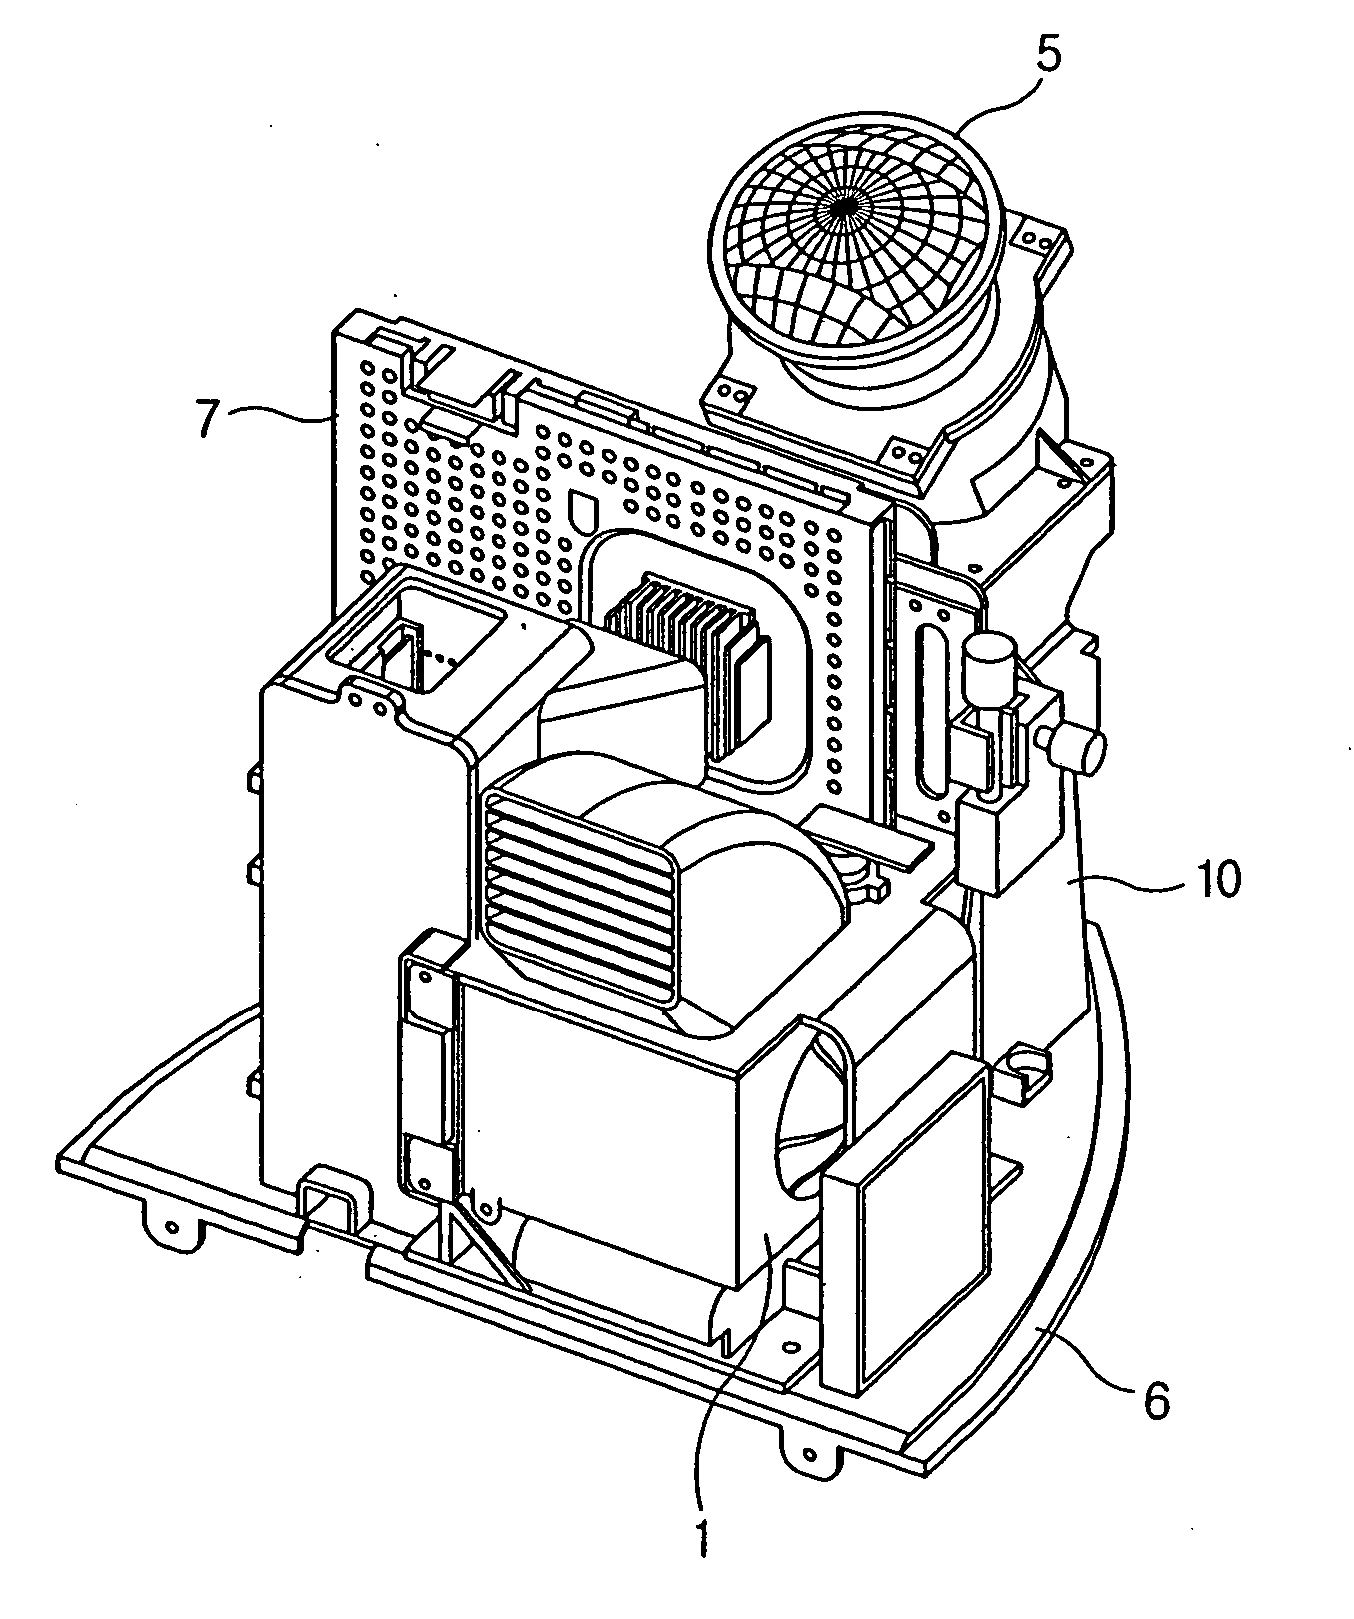 Optical engine apparatus